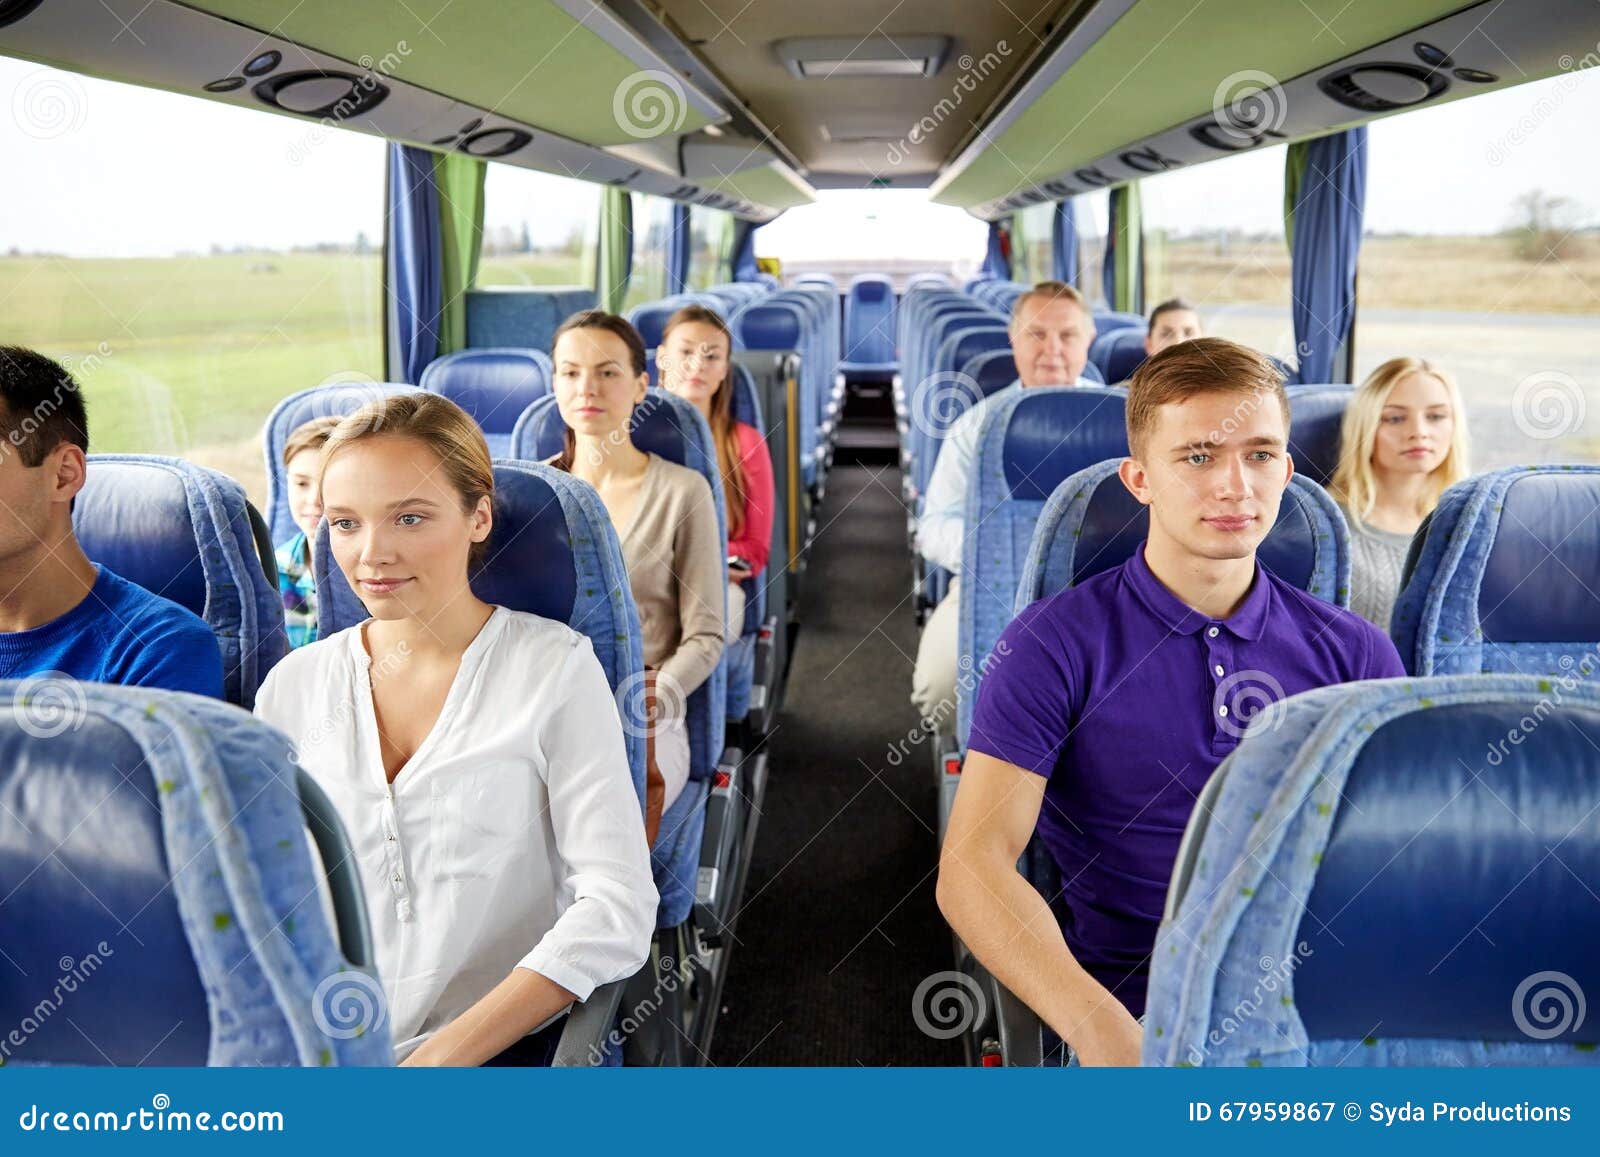 enjoy travelling bus